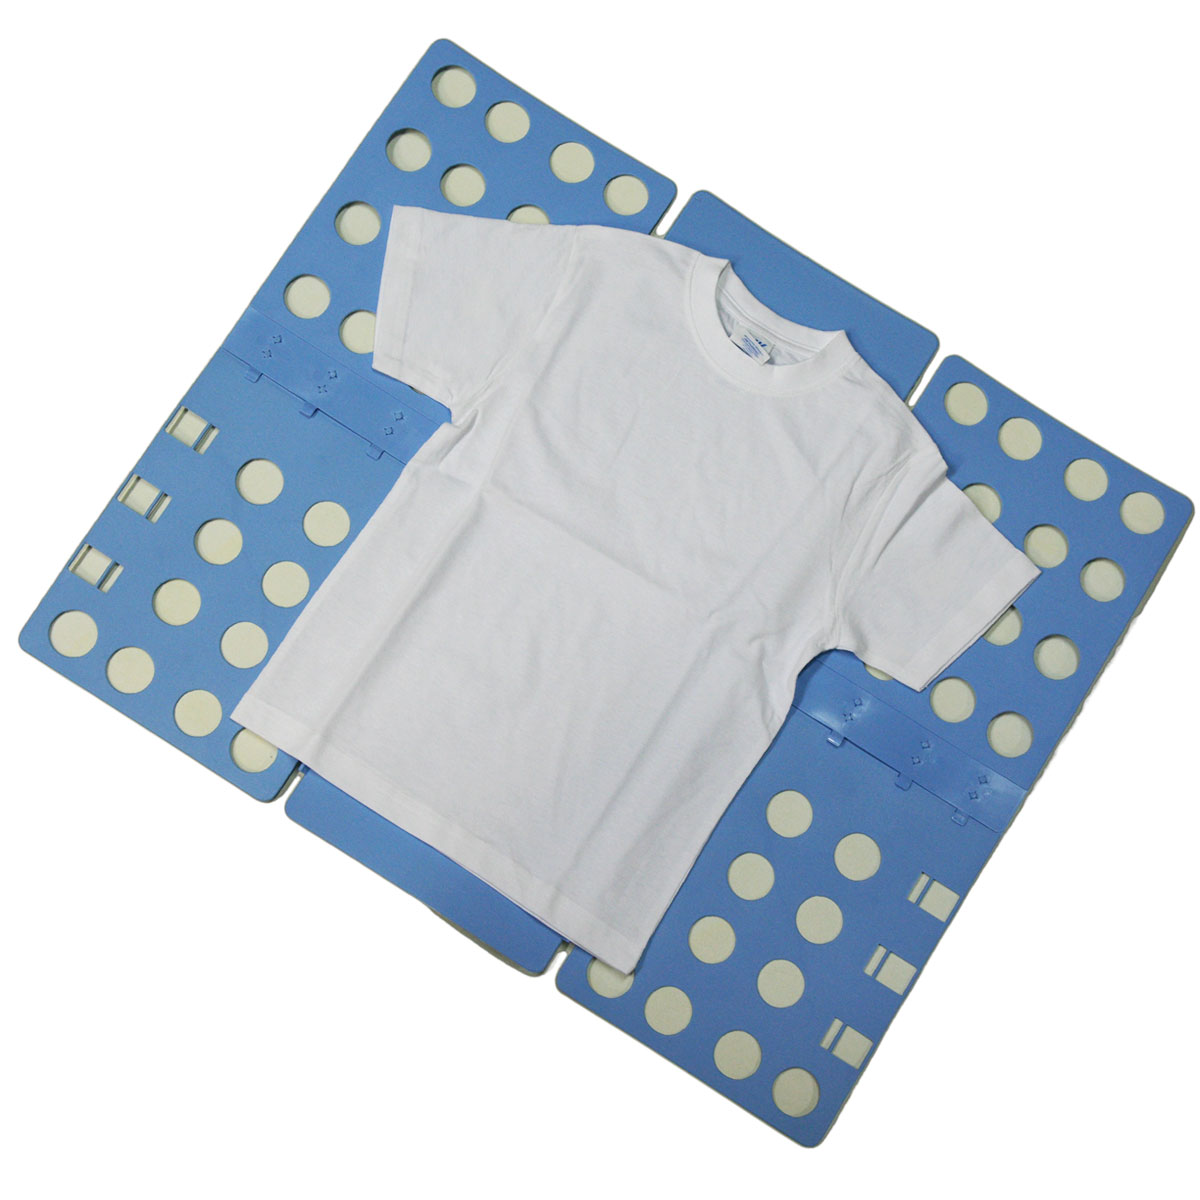 T-Shirt folding board